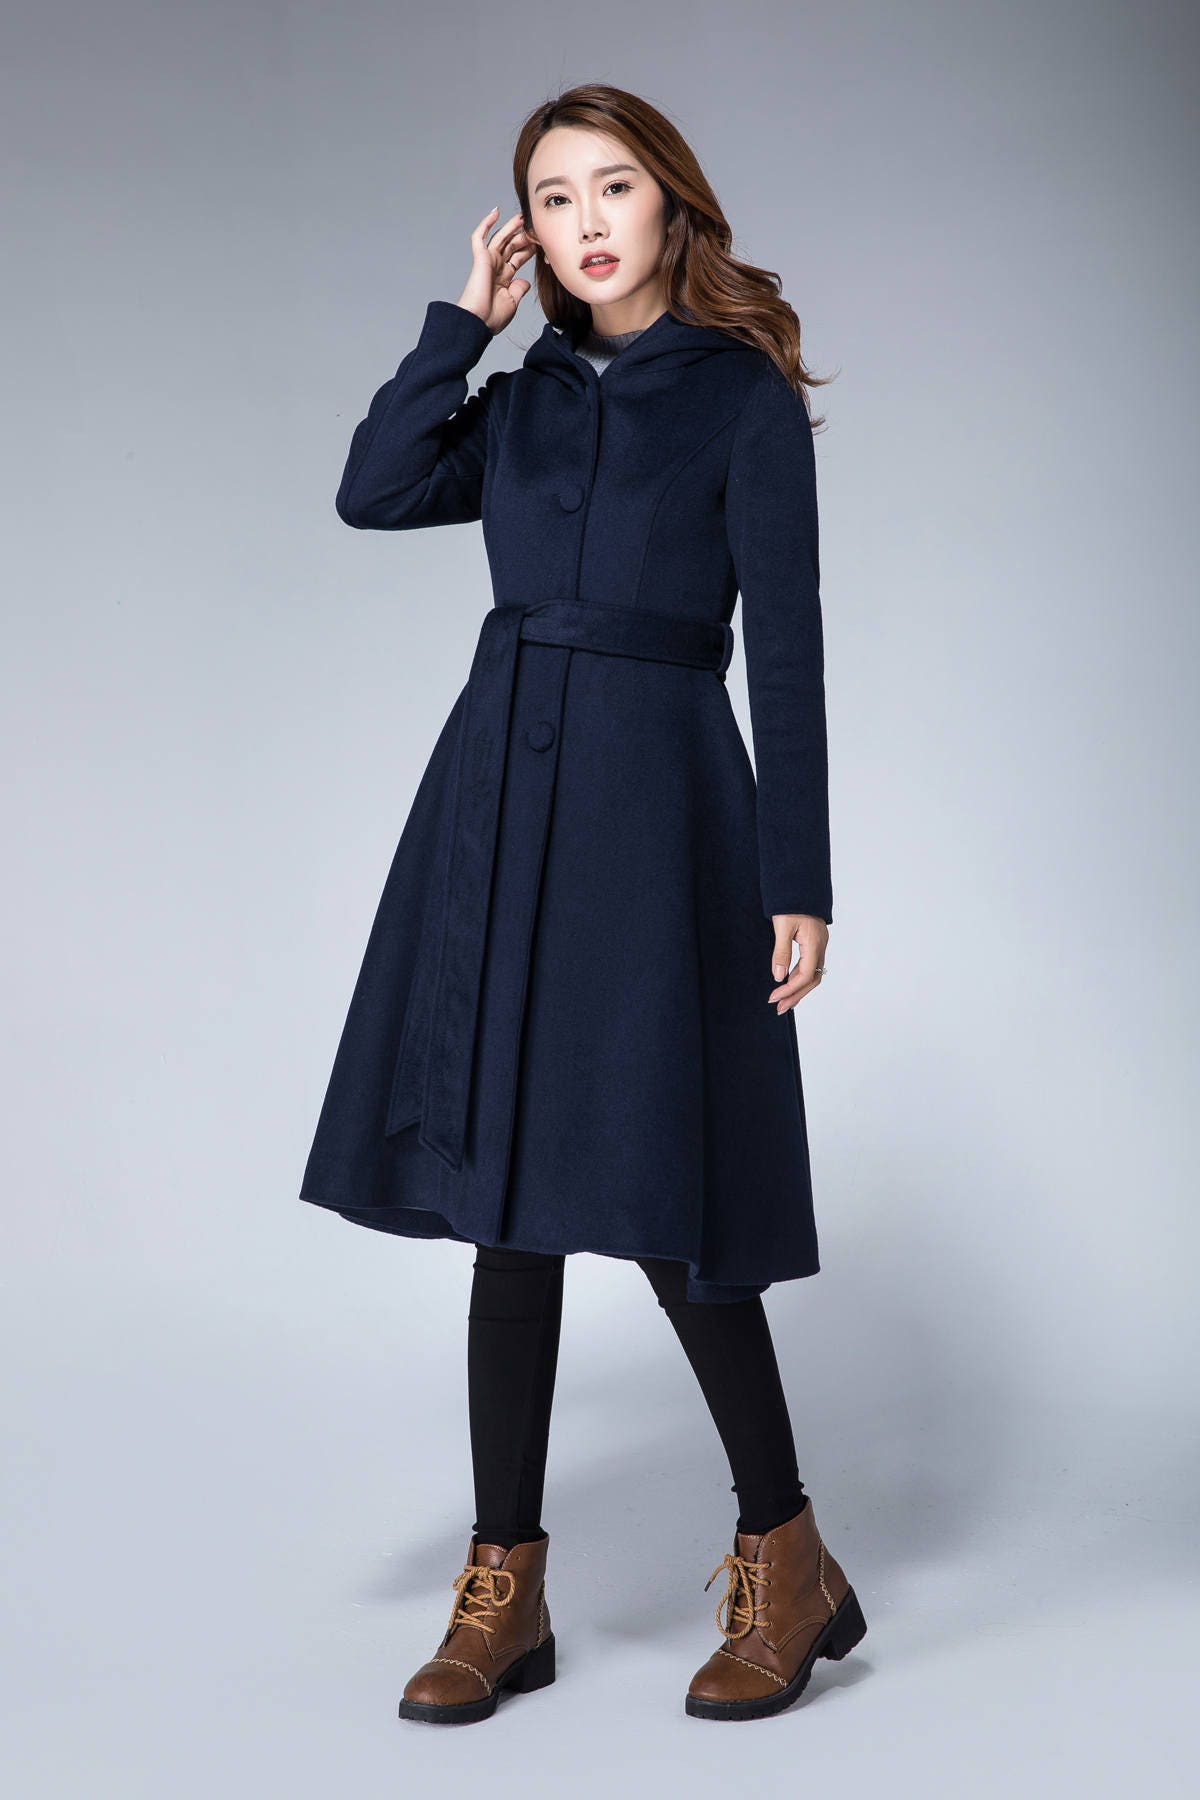 Wool Coat With Hood Belted Coat Navy Blue Coat Mod Coat | Etsy